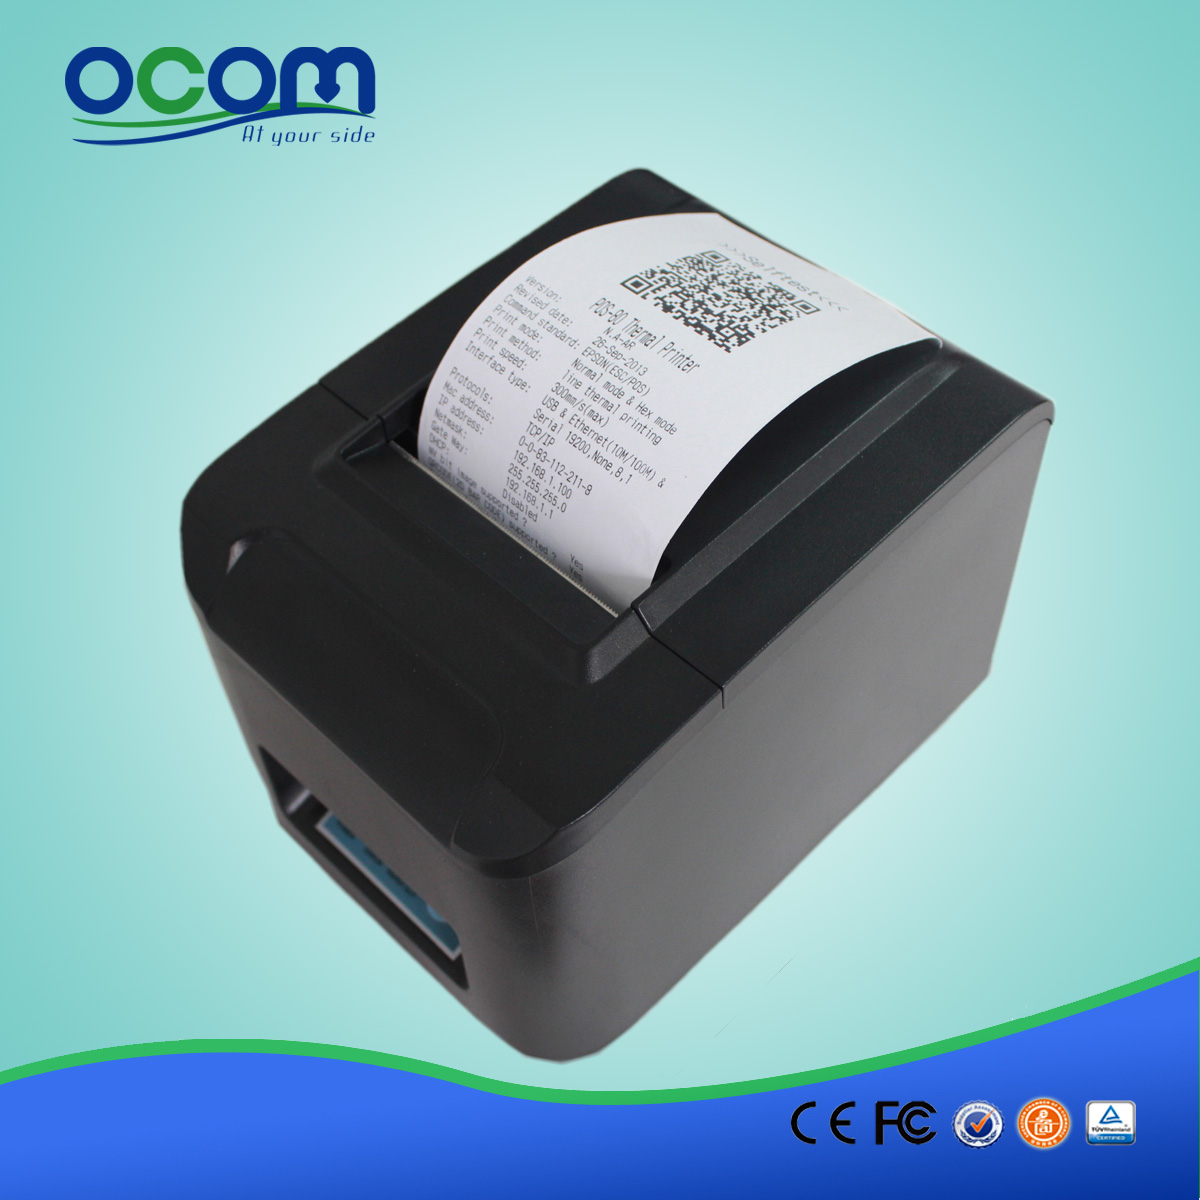 (OCPP-808) China 80mm thermal receipt printer factory